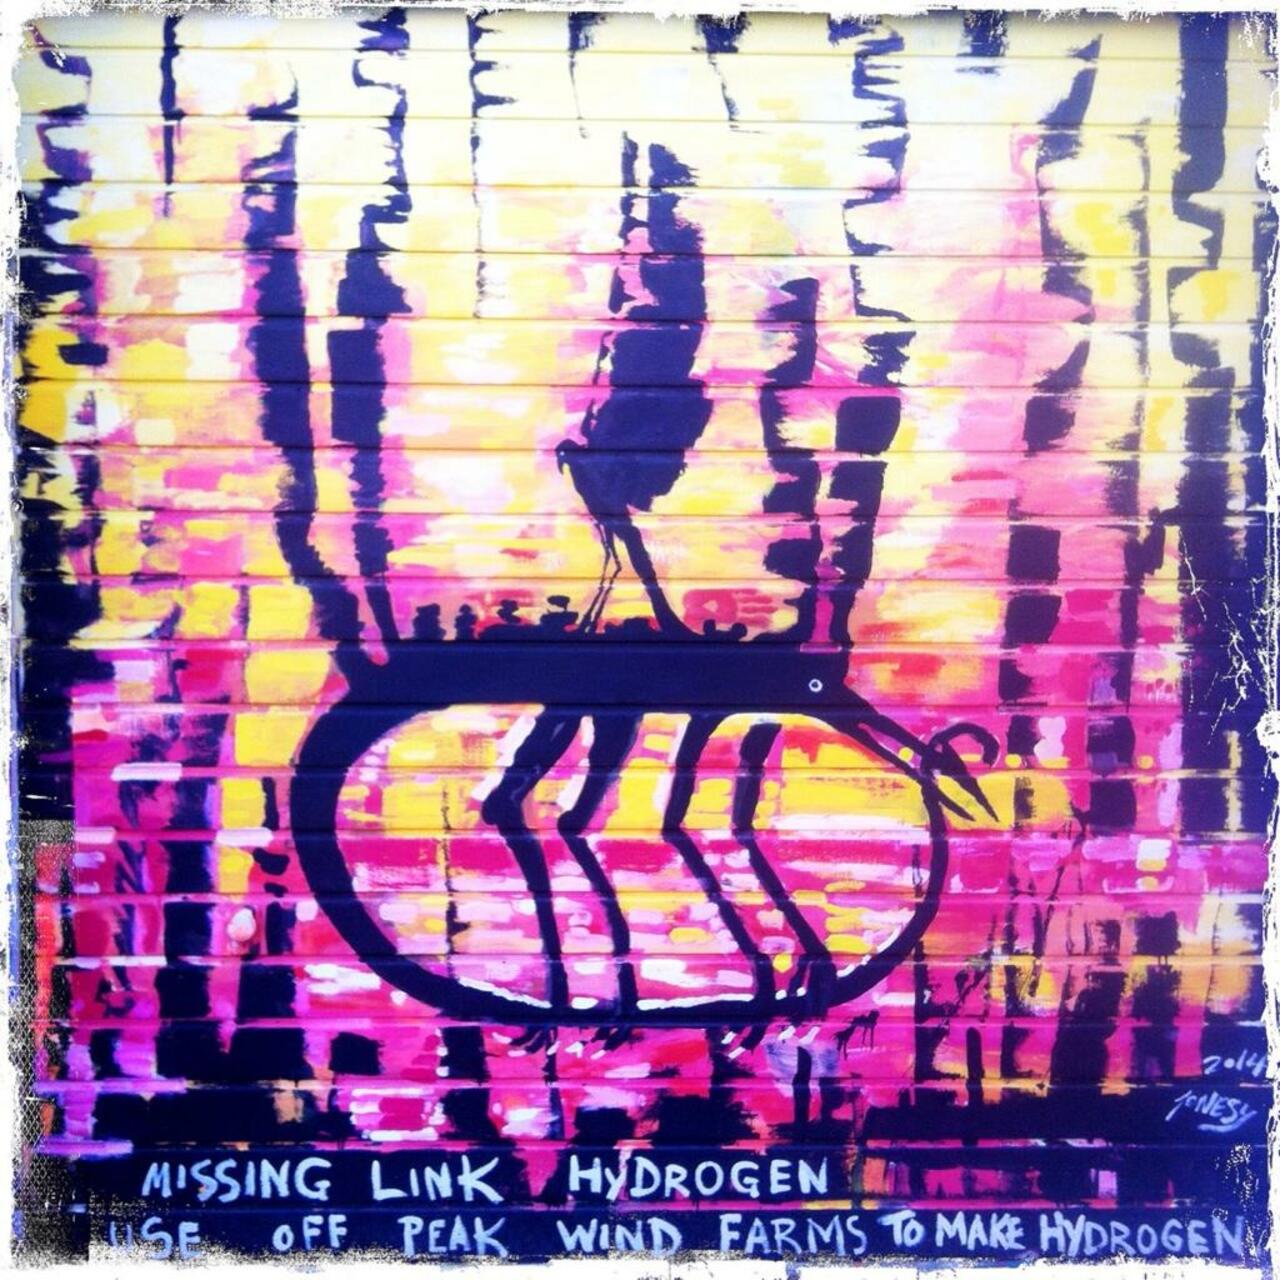 Missing link hydrogen.. 

Streetart by #jonsey off Brick Lane #art #graffiti http://t.co/9LzhGvlJpd